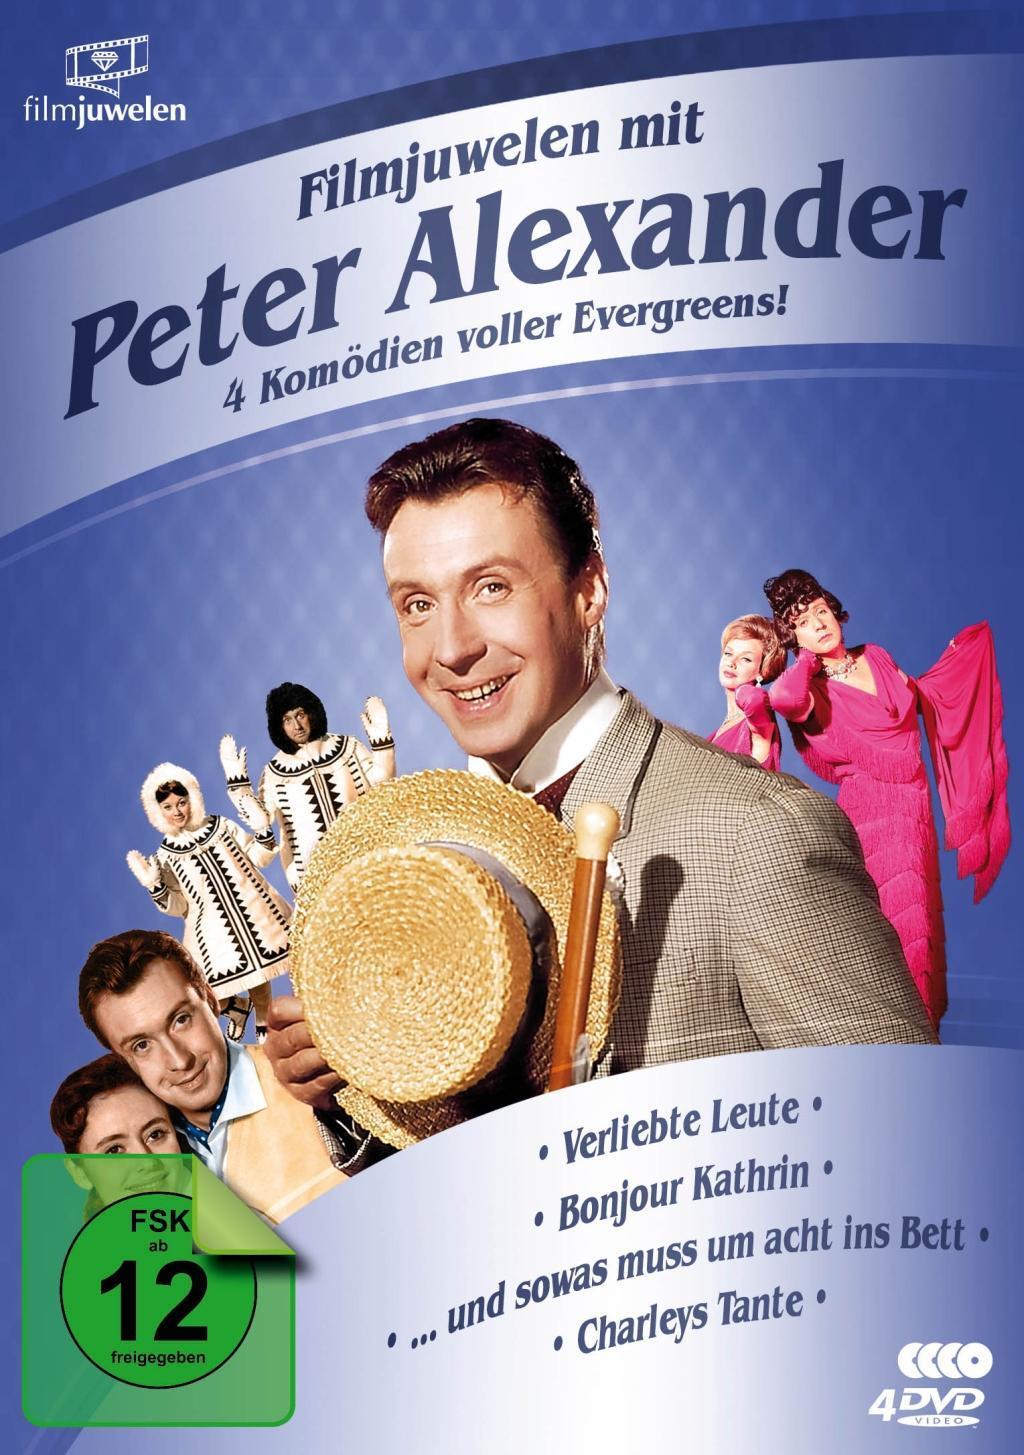 Cover: 4042564180183 | Filmjuwelen mit Peter Alexander: 4 Komödien voller Evergreens! | DVD